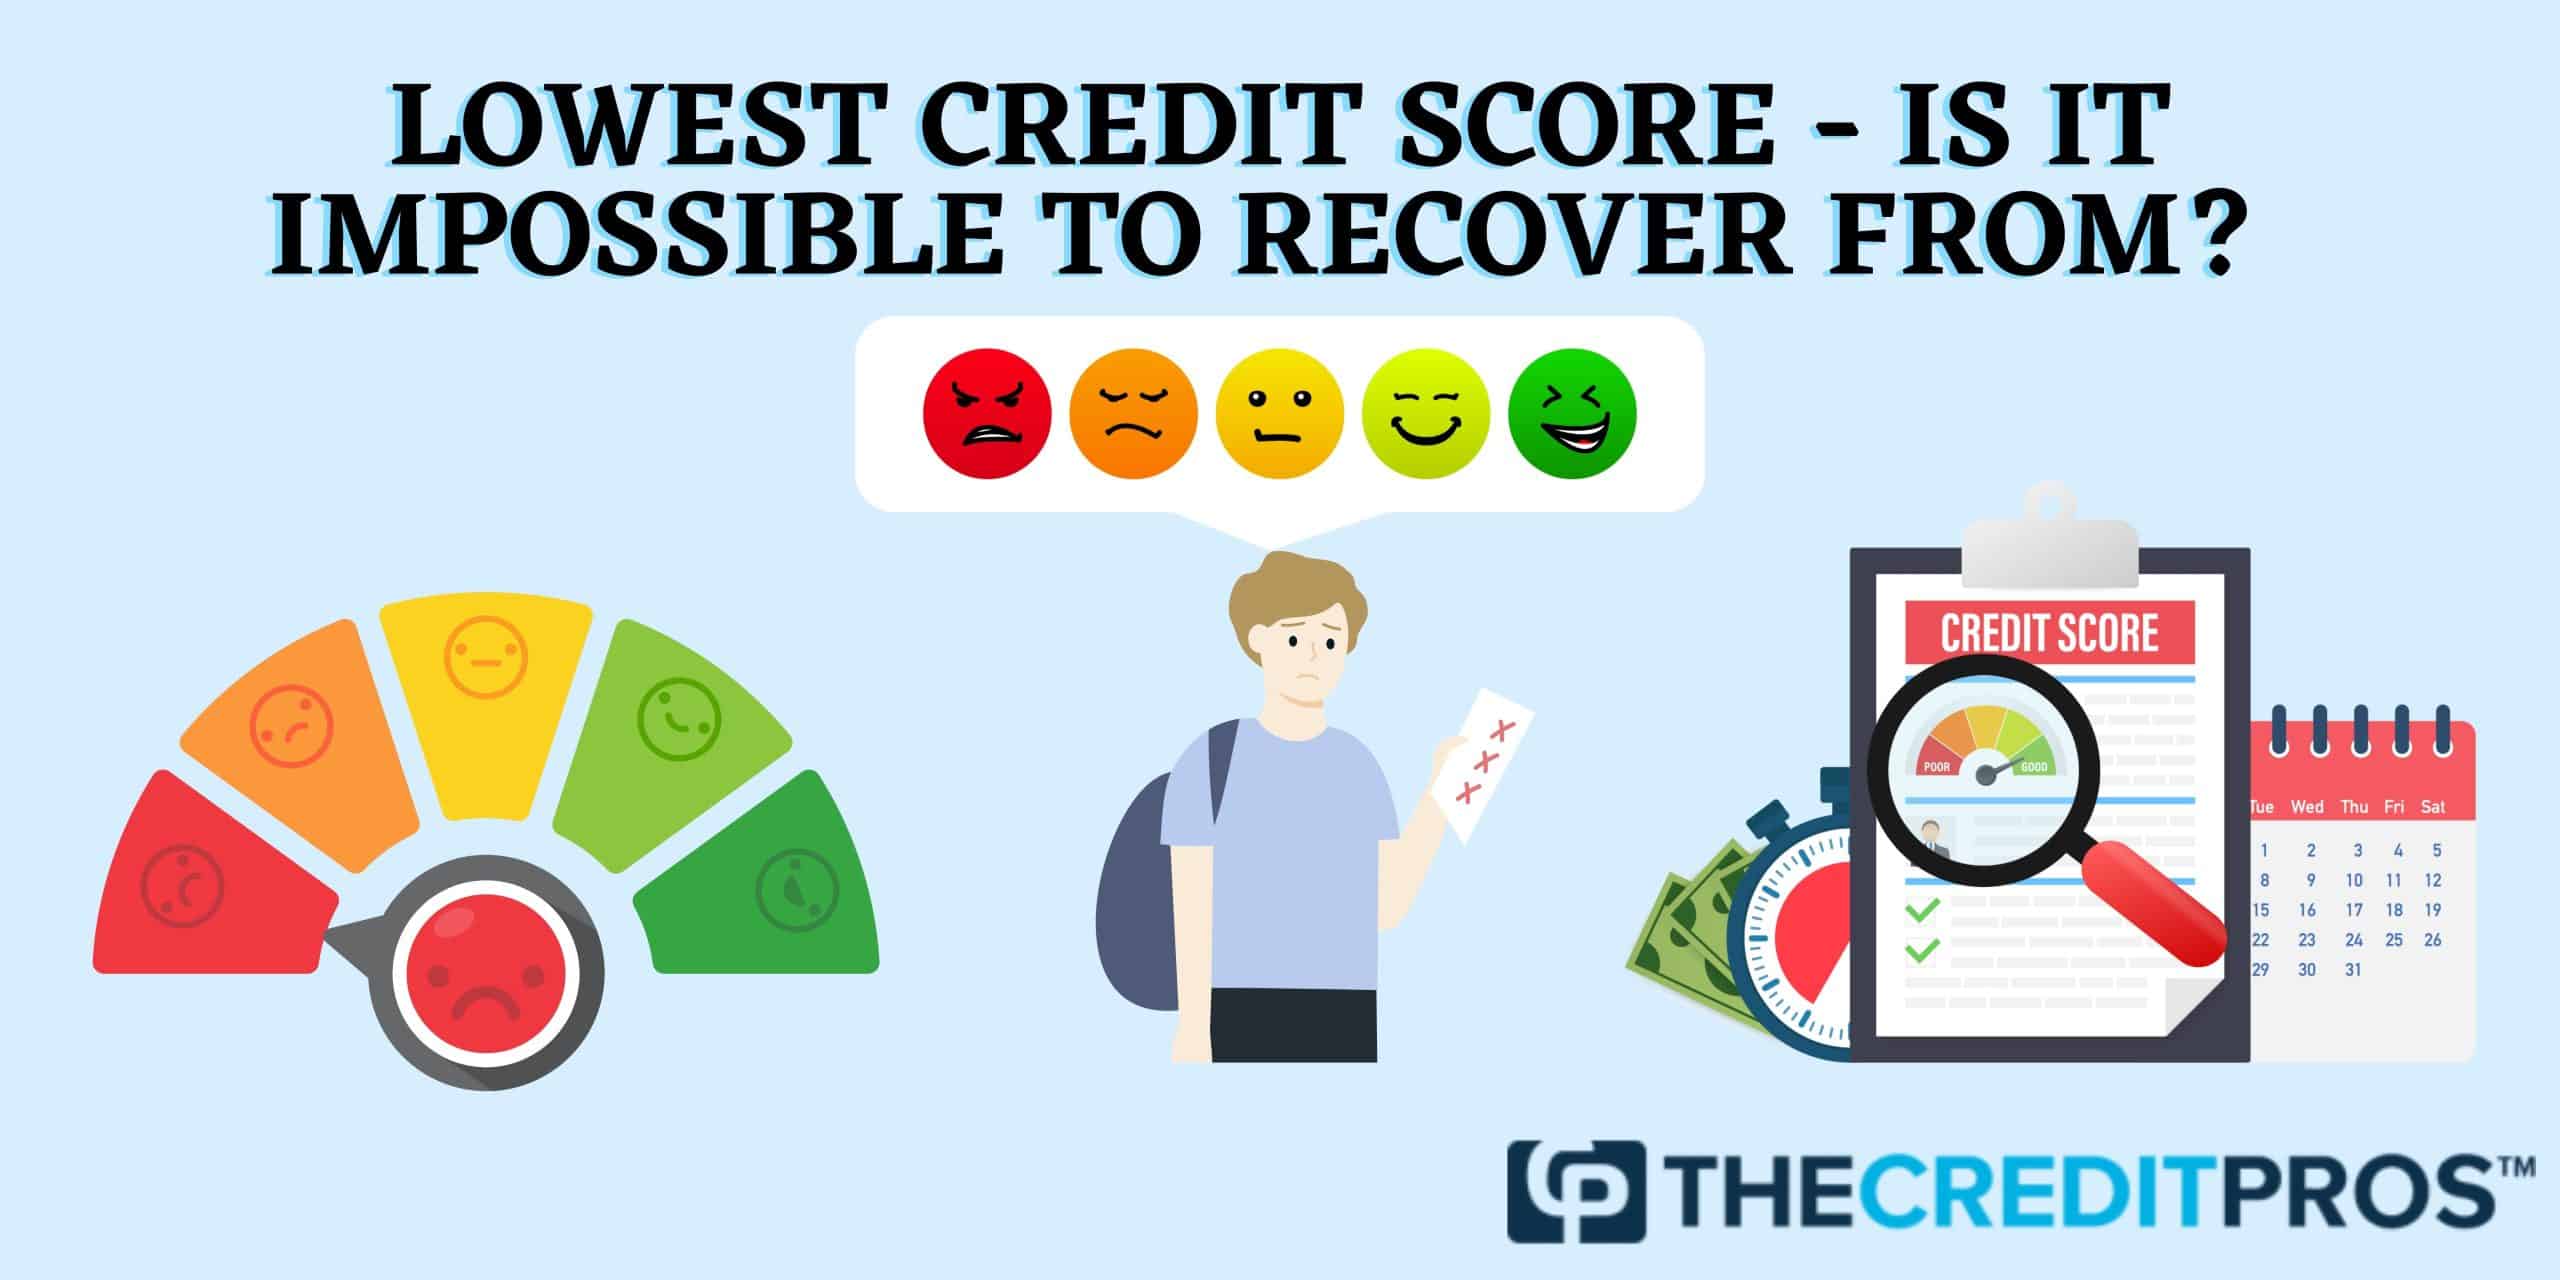 lowest credit score